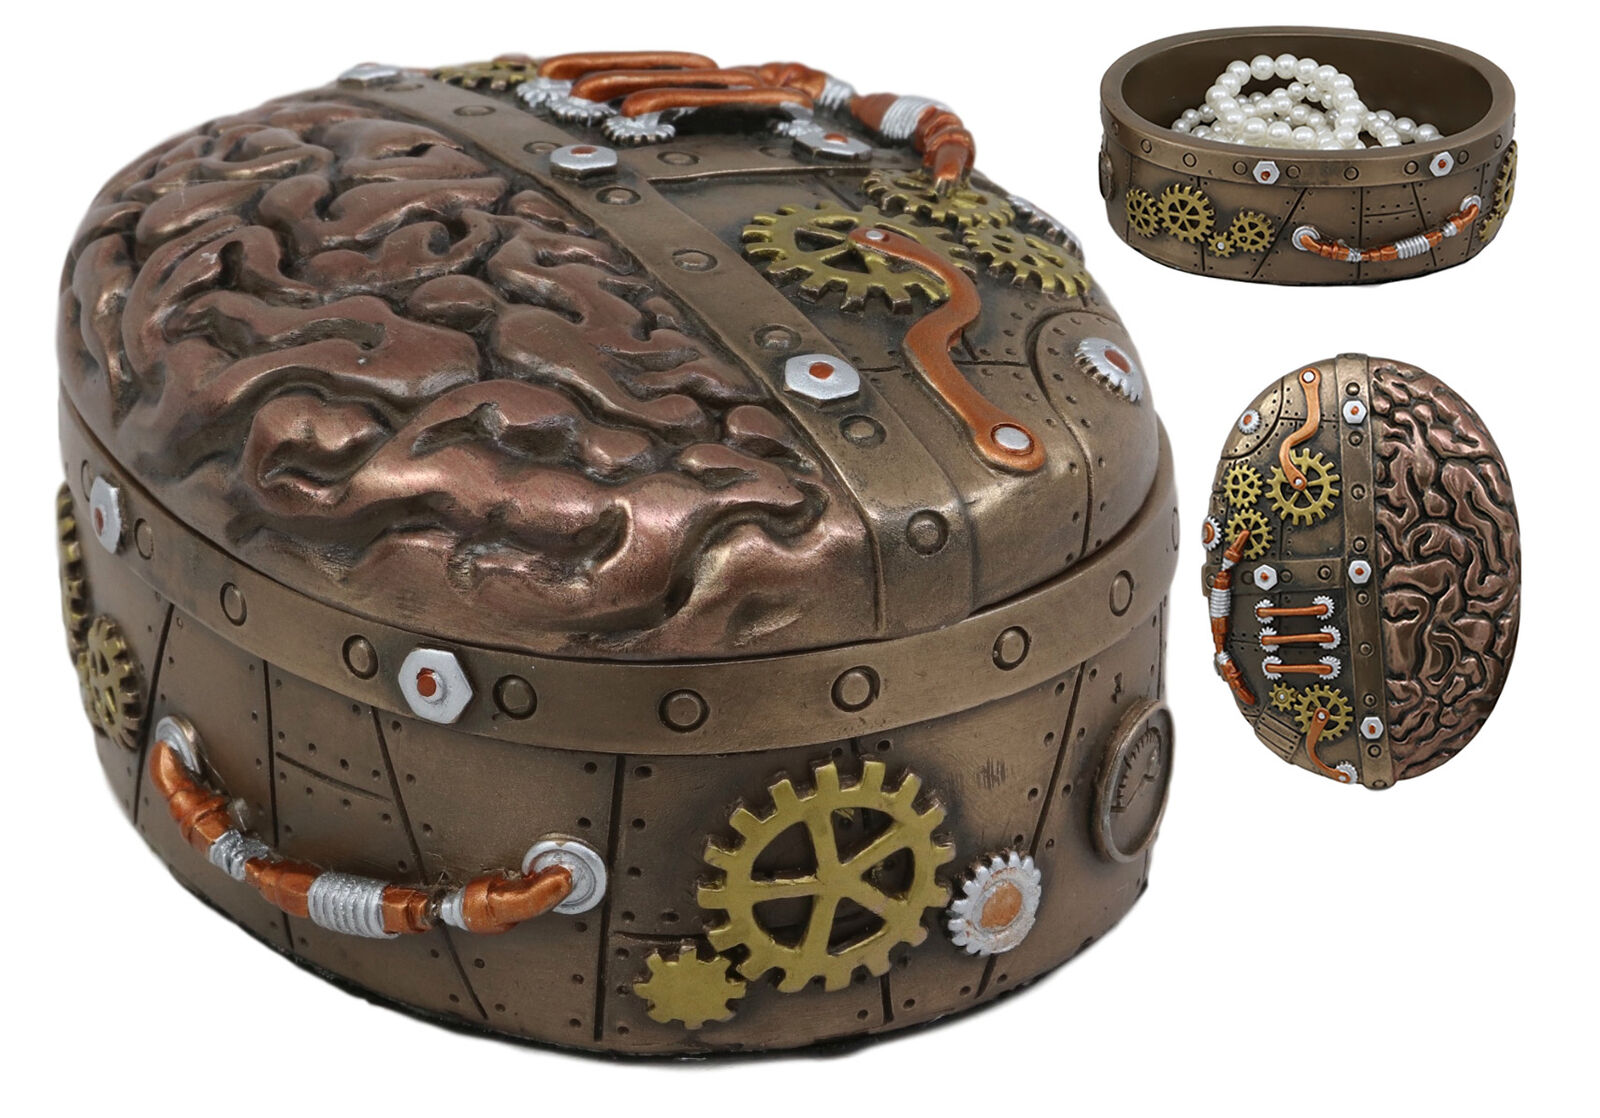 Vintage Design Steampunk Brain Robotic Control Center Jewelry Box Figurine Decor